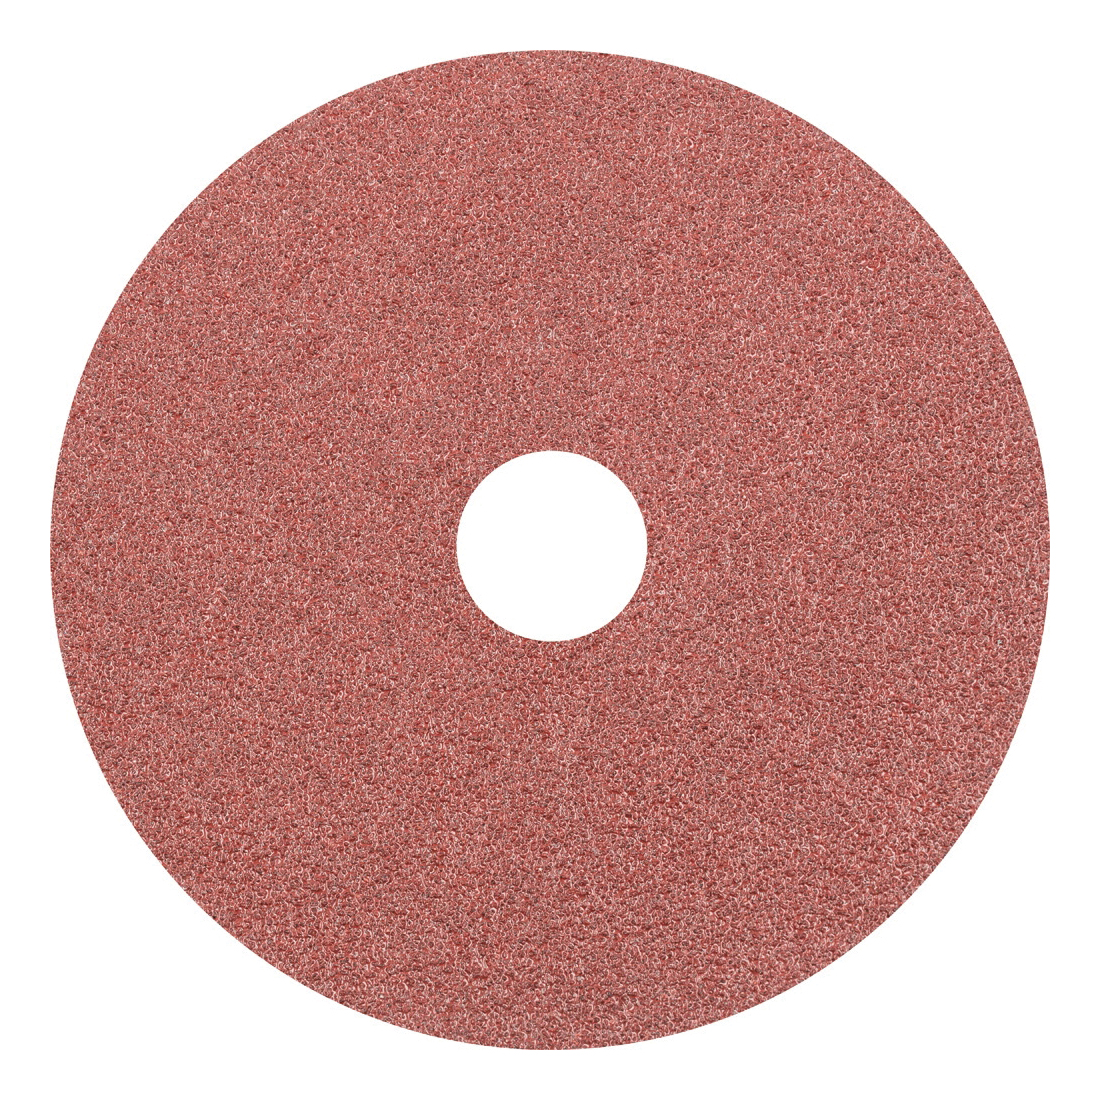 PFERD 62454 Standard Coated Abrasive Disc, 4-1/2 in Dia, 7/8 in Center Hole, 50 Grit, Aluminum Oxide Abrasive, Arbor Attachment